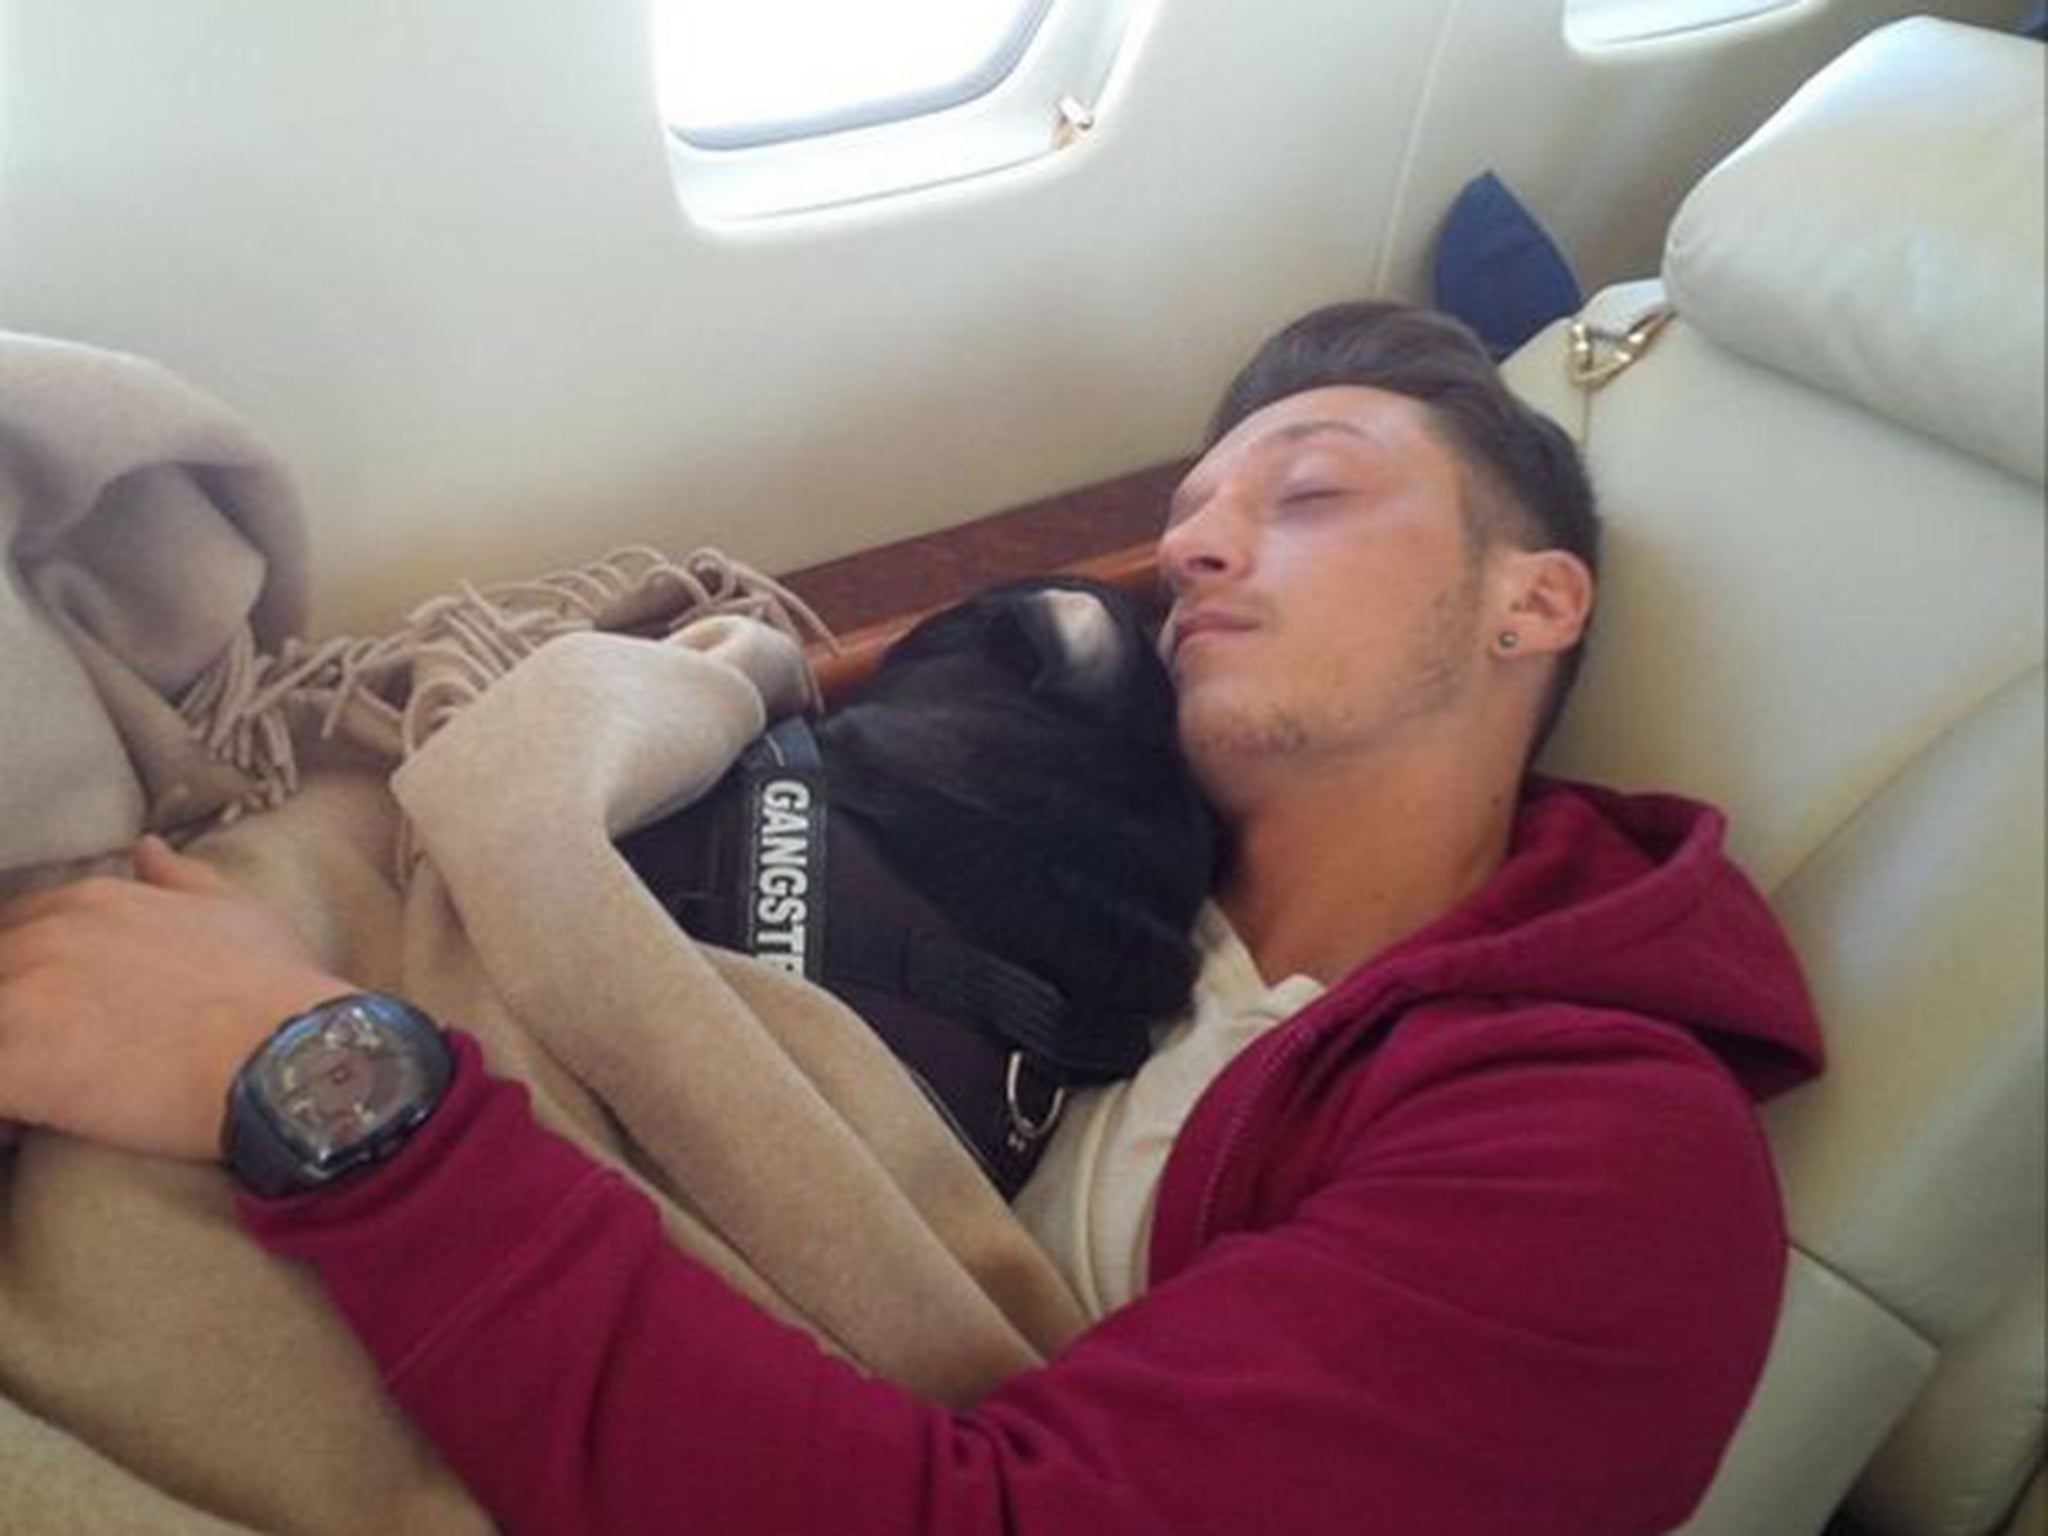 Mesut Özil asleep with his dog Balboa on a plane